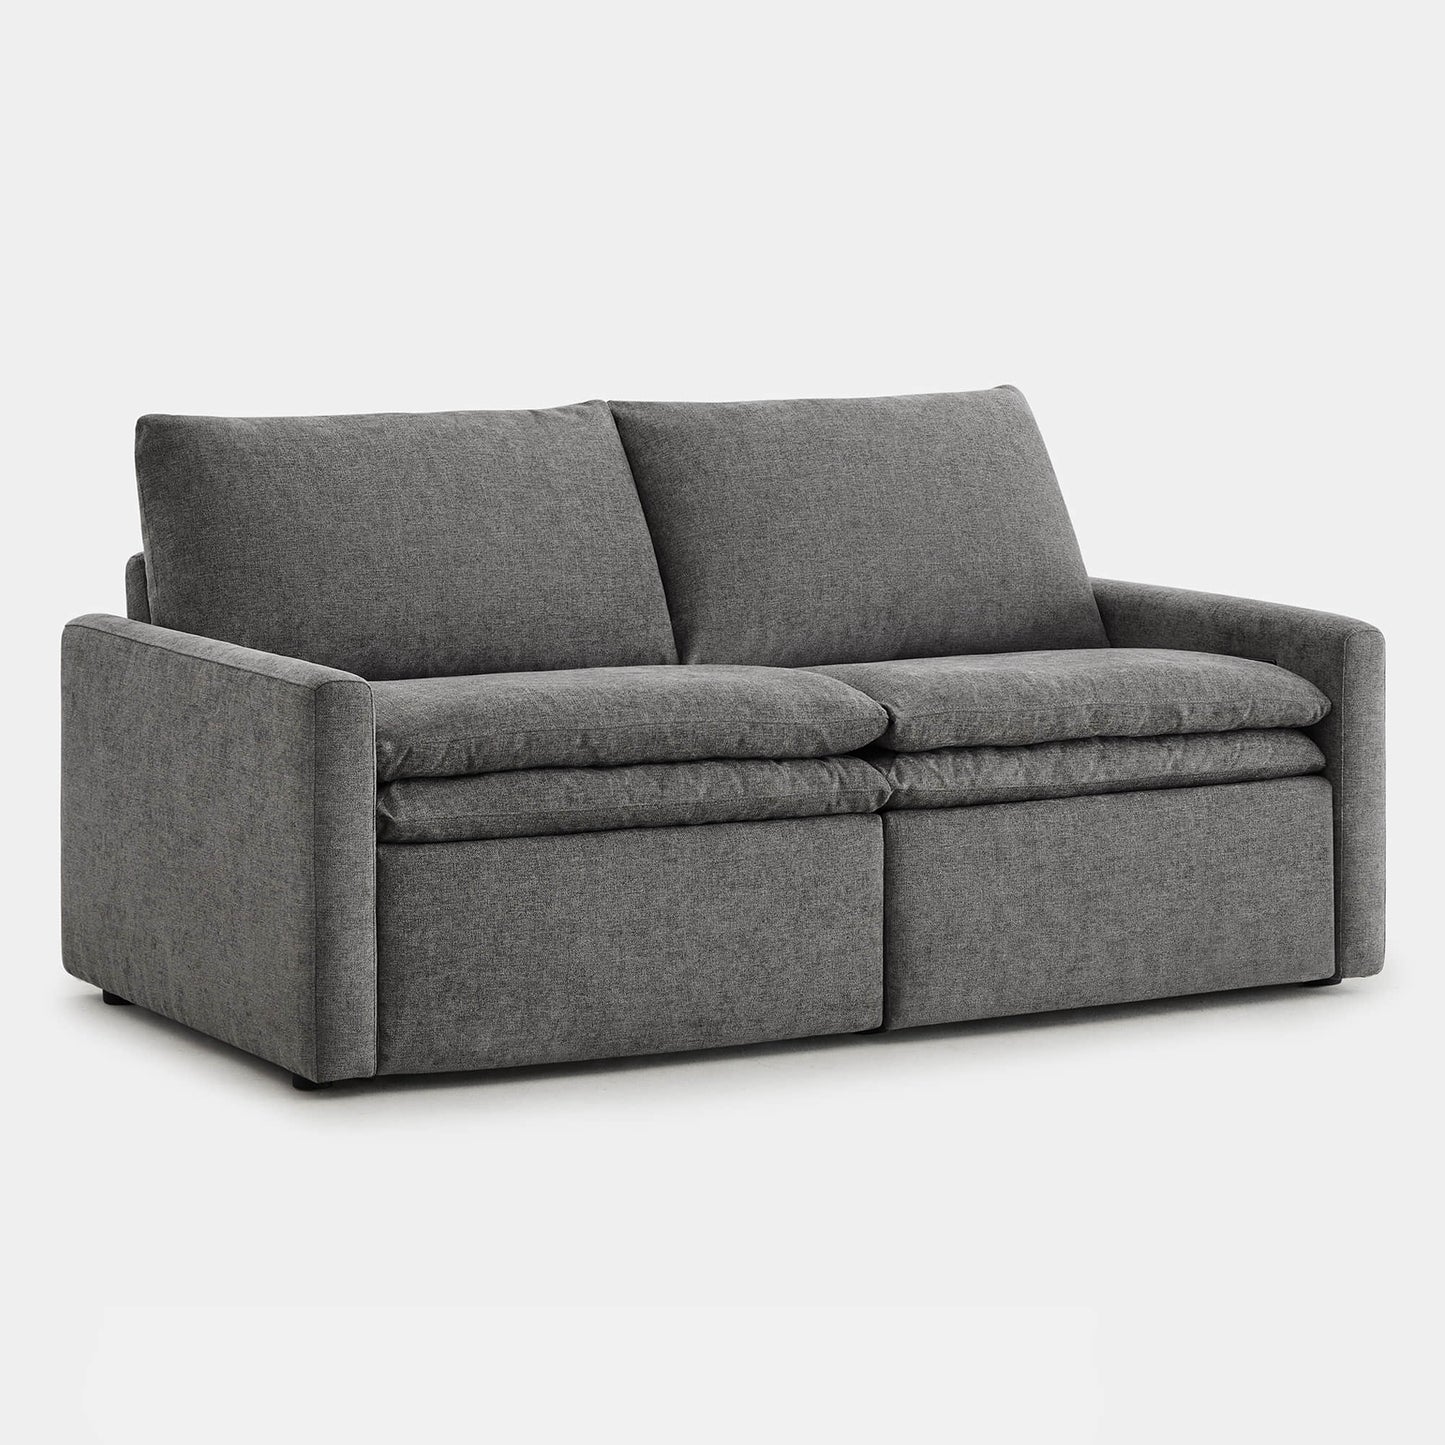 CHITA recliner sofa